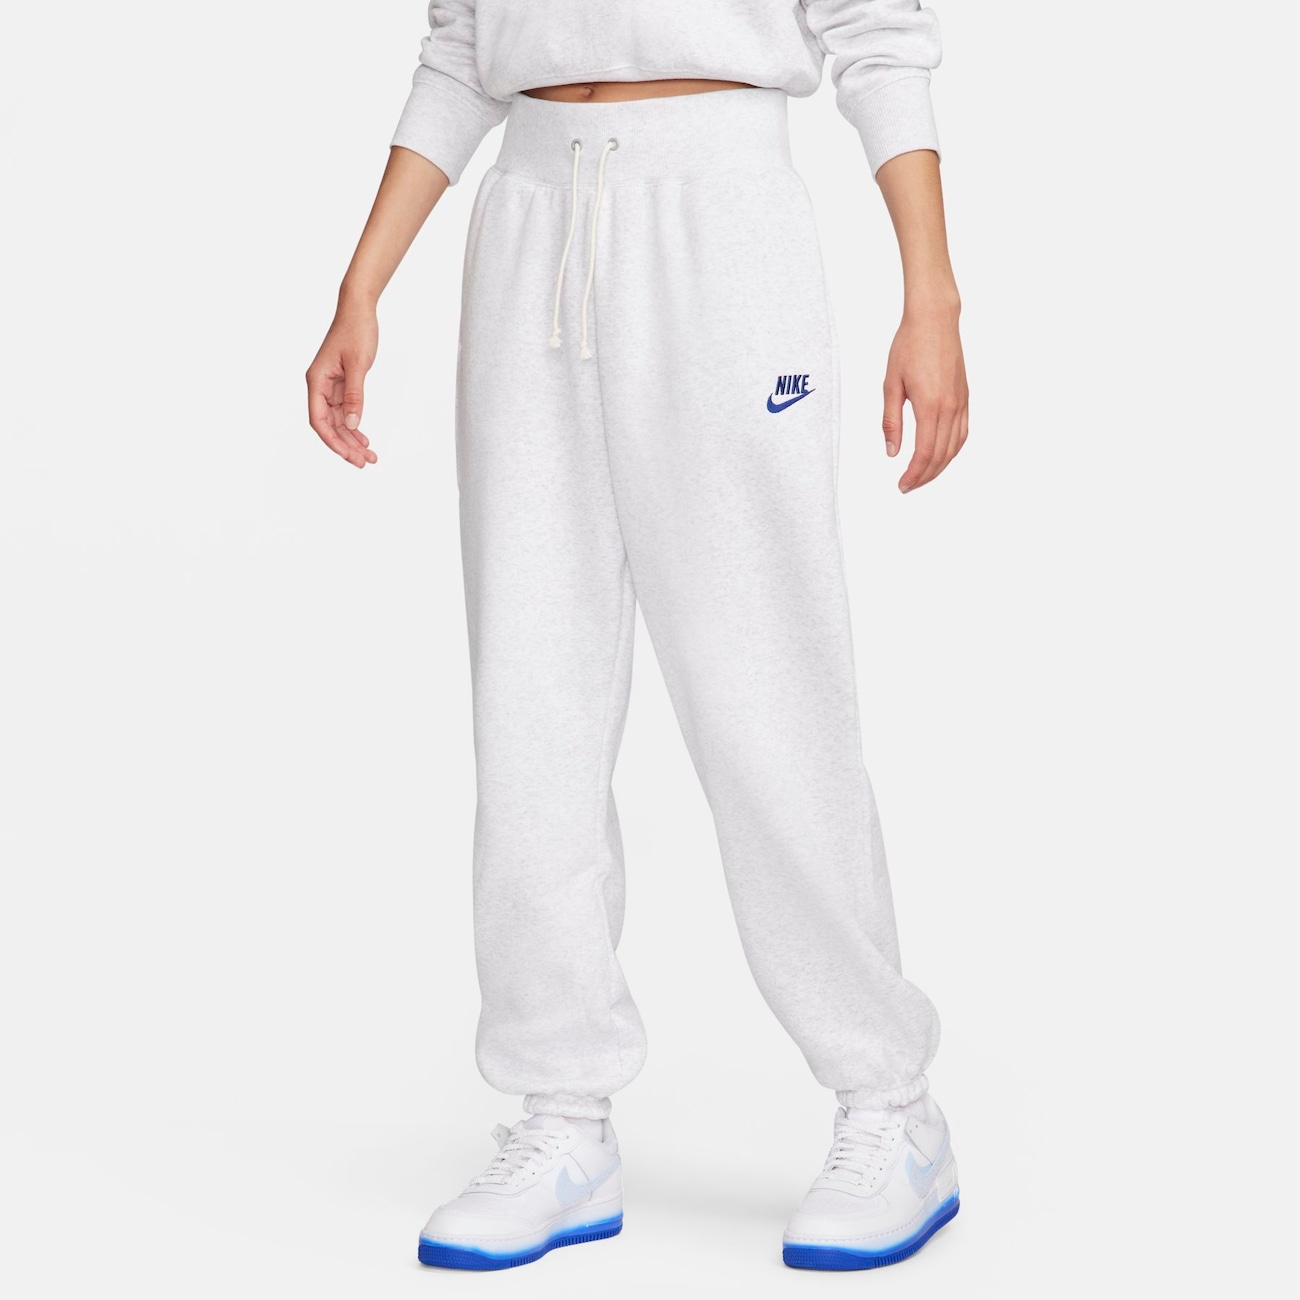 Calça Nike Sportswear Fleece Feminina